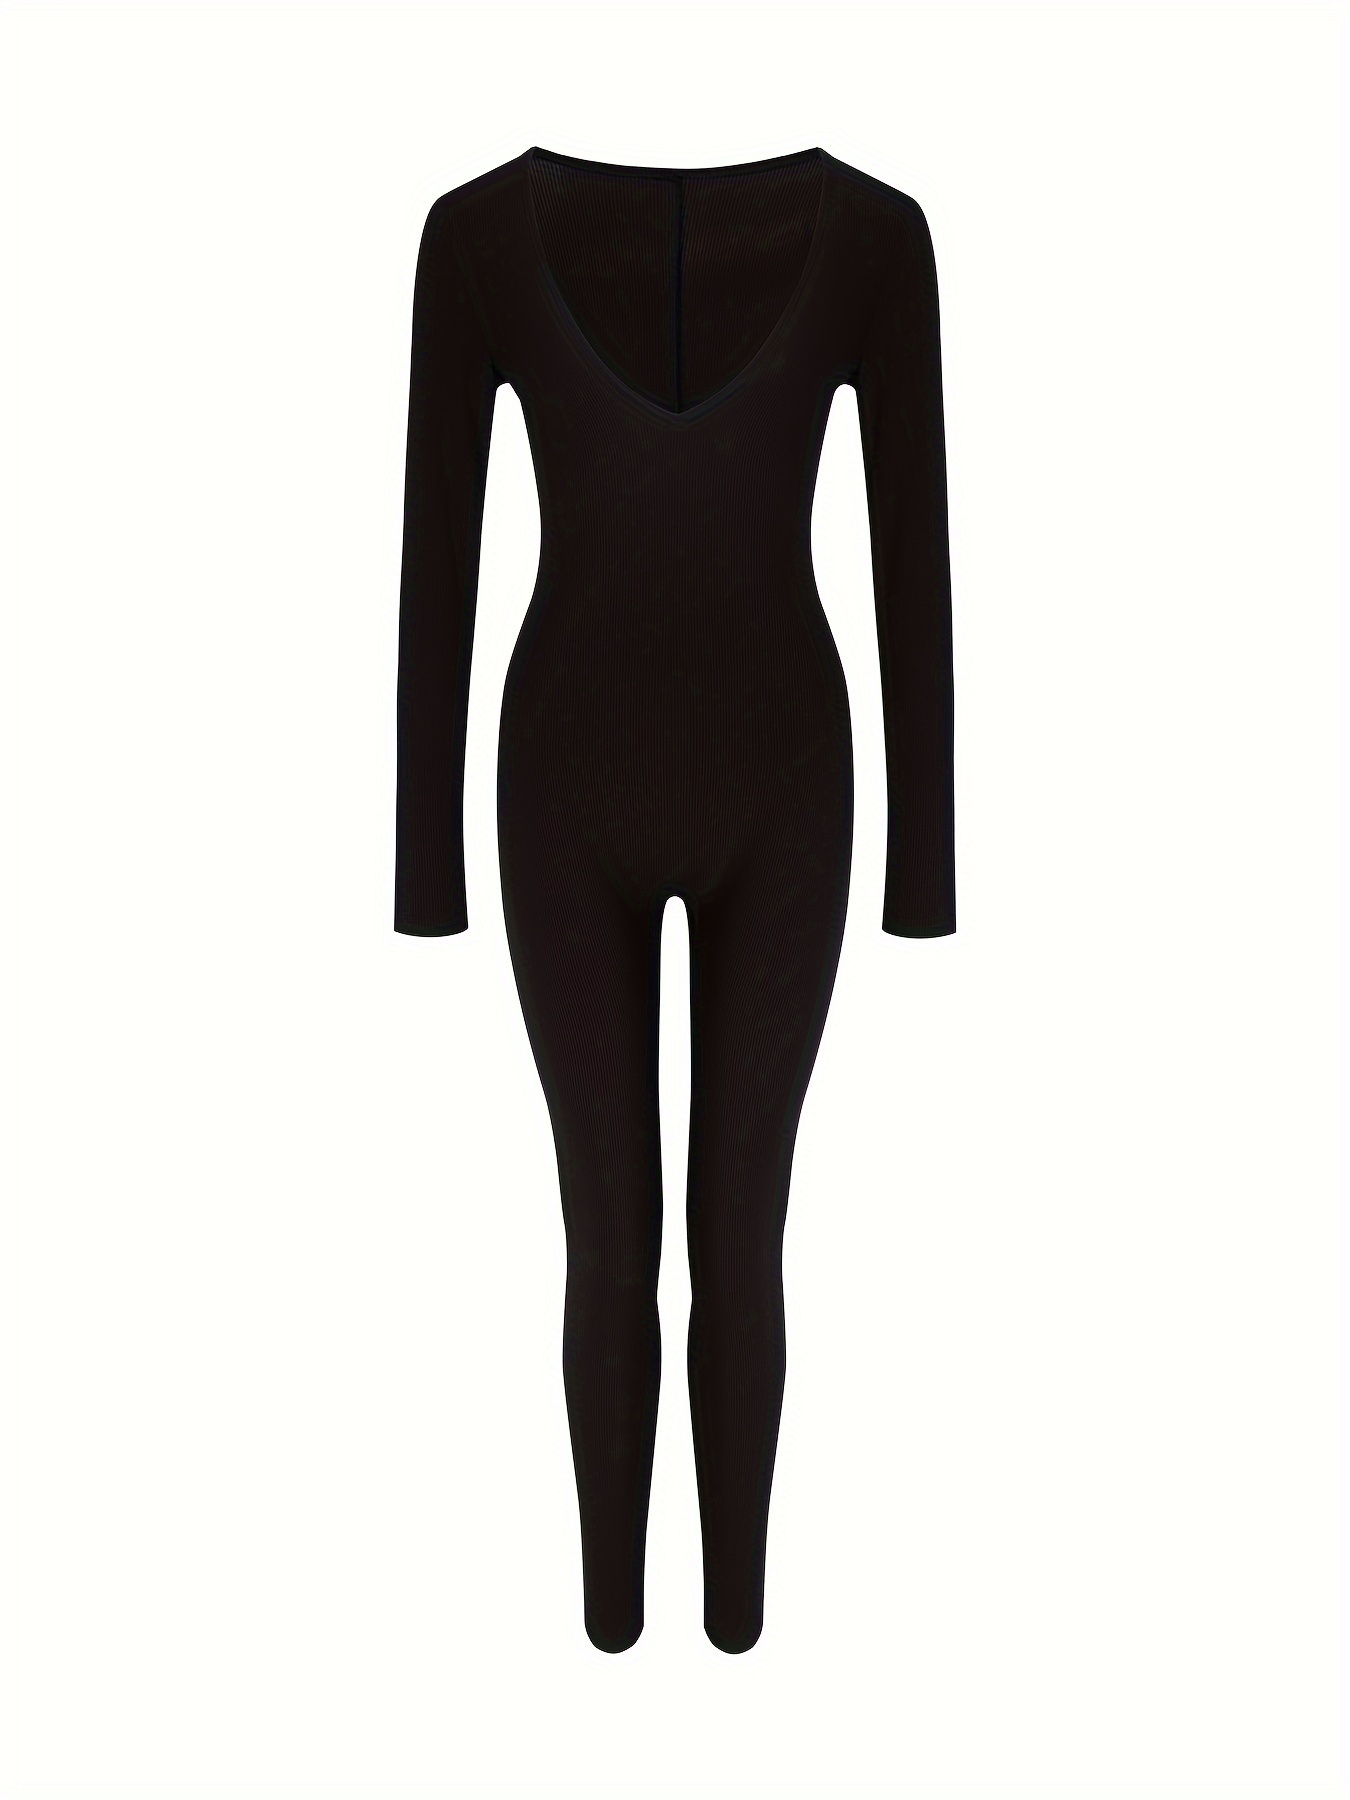 Black Skinny Hooded Jumpsuit For Women Long Sleeve Backless